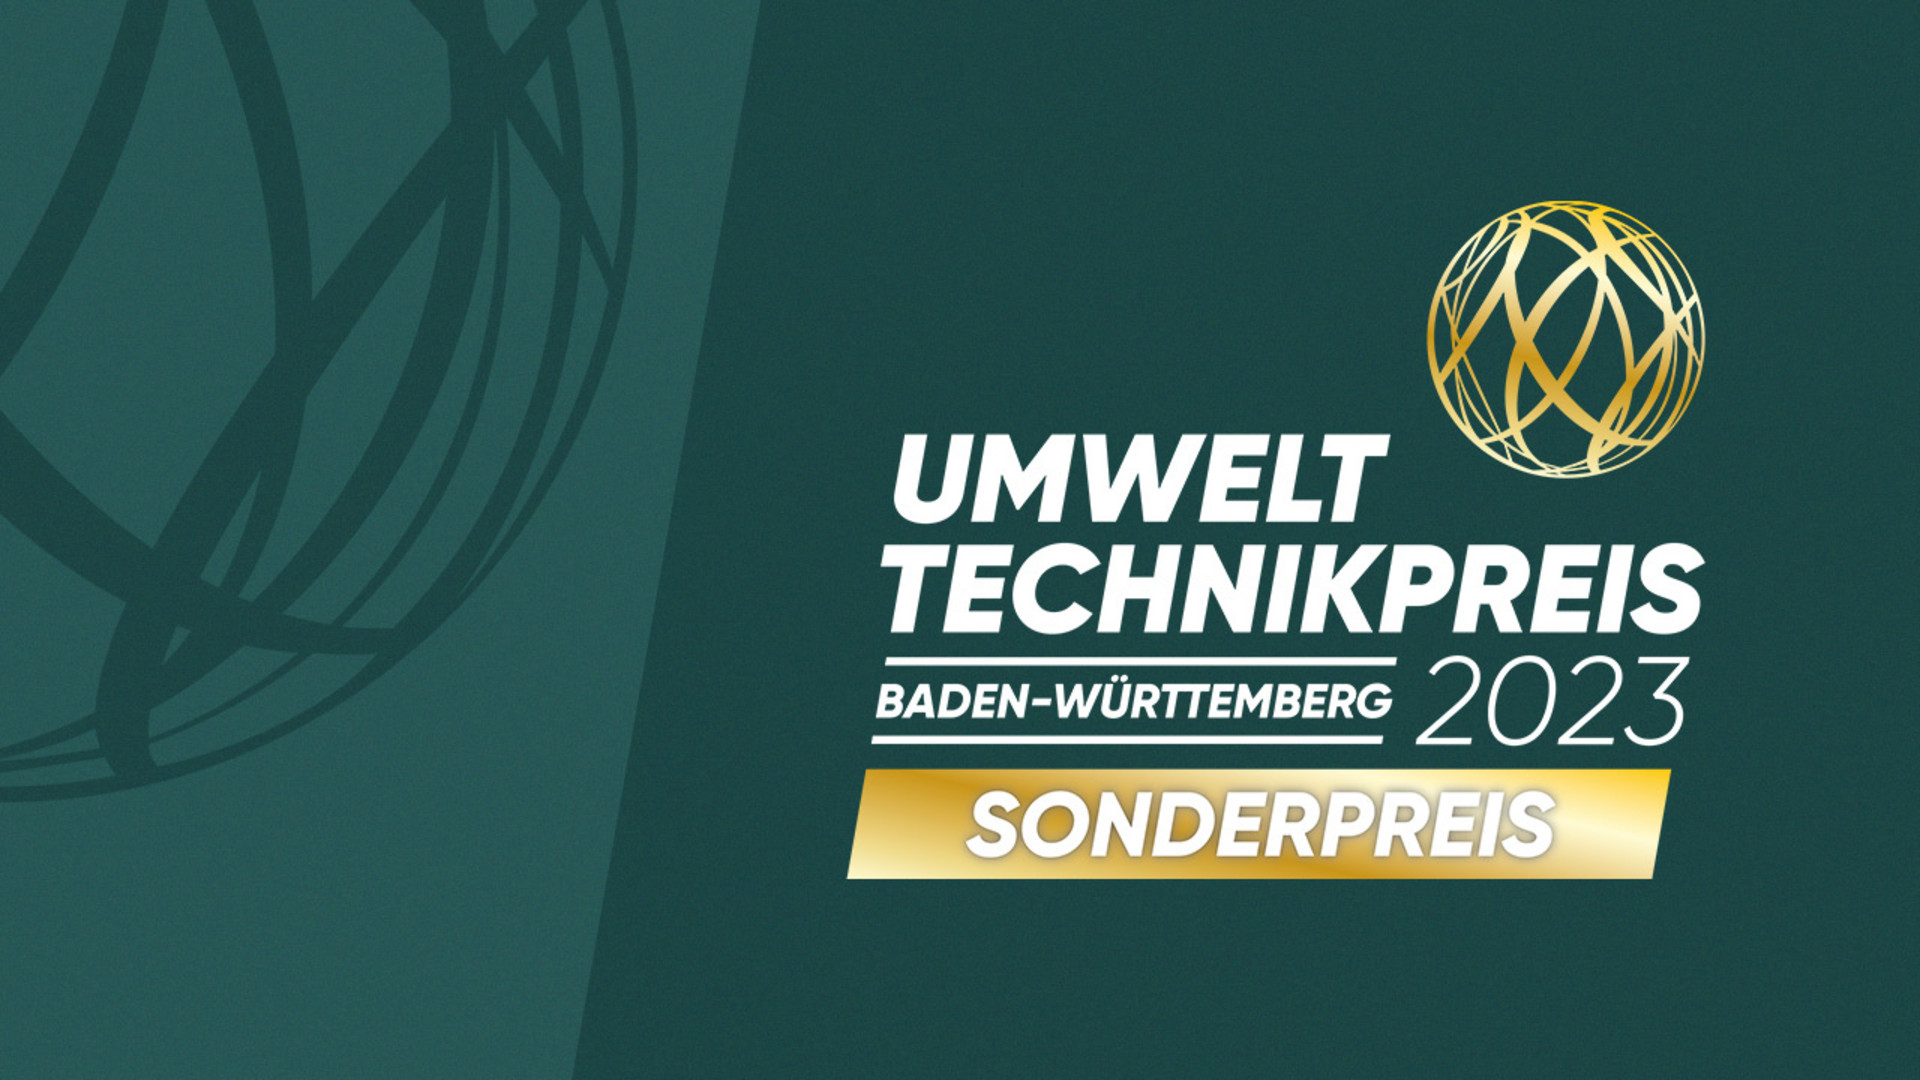 Umwelttechnikpreis Baden-Württemberg 2023: Sonderpreis der Jury